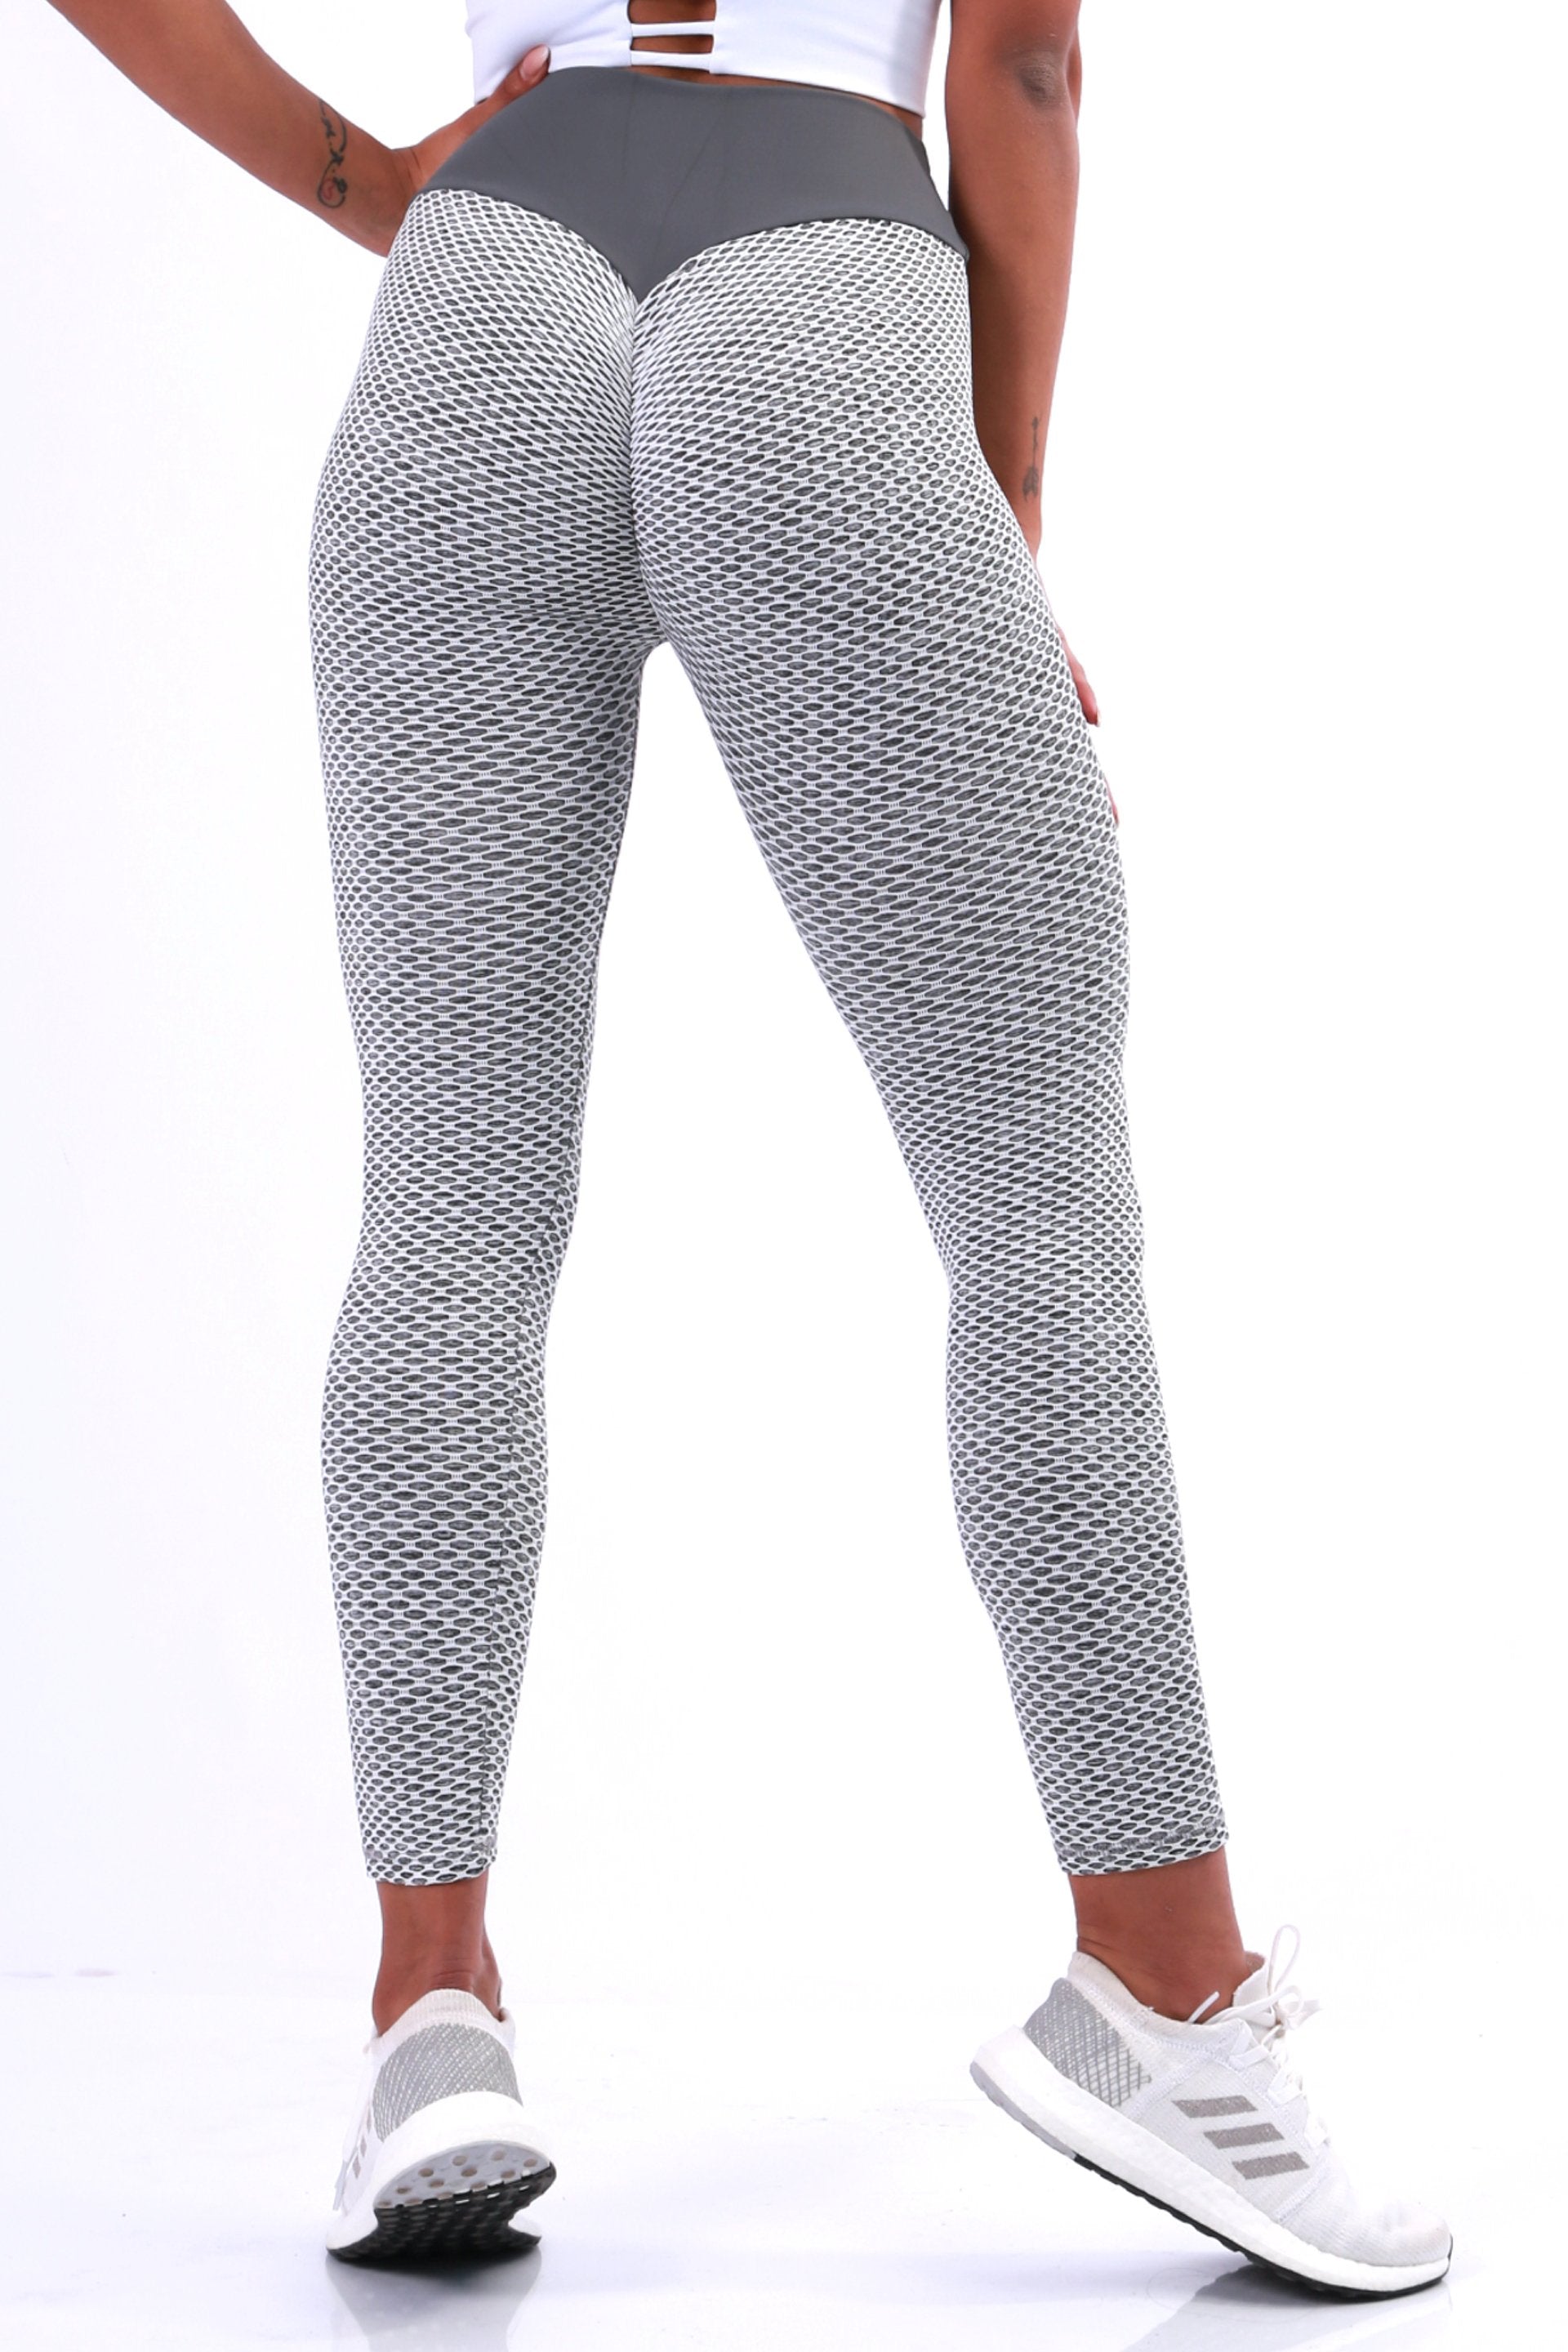 Image of Wonderfit Bubble leggings AKA ‘Tik Tok Pants’ - Anti cellulite leggings - Grey